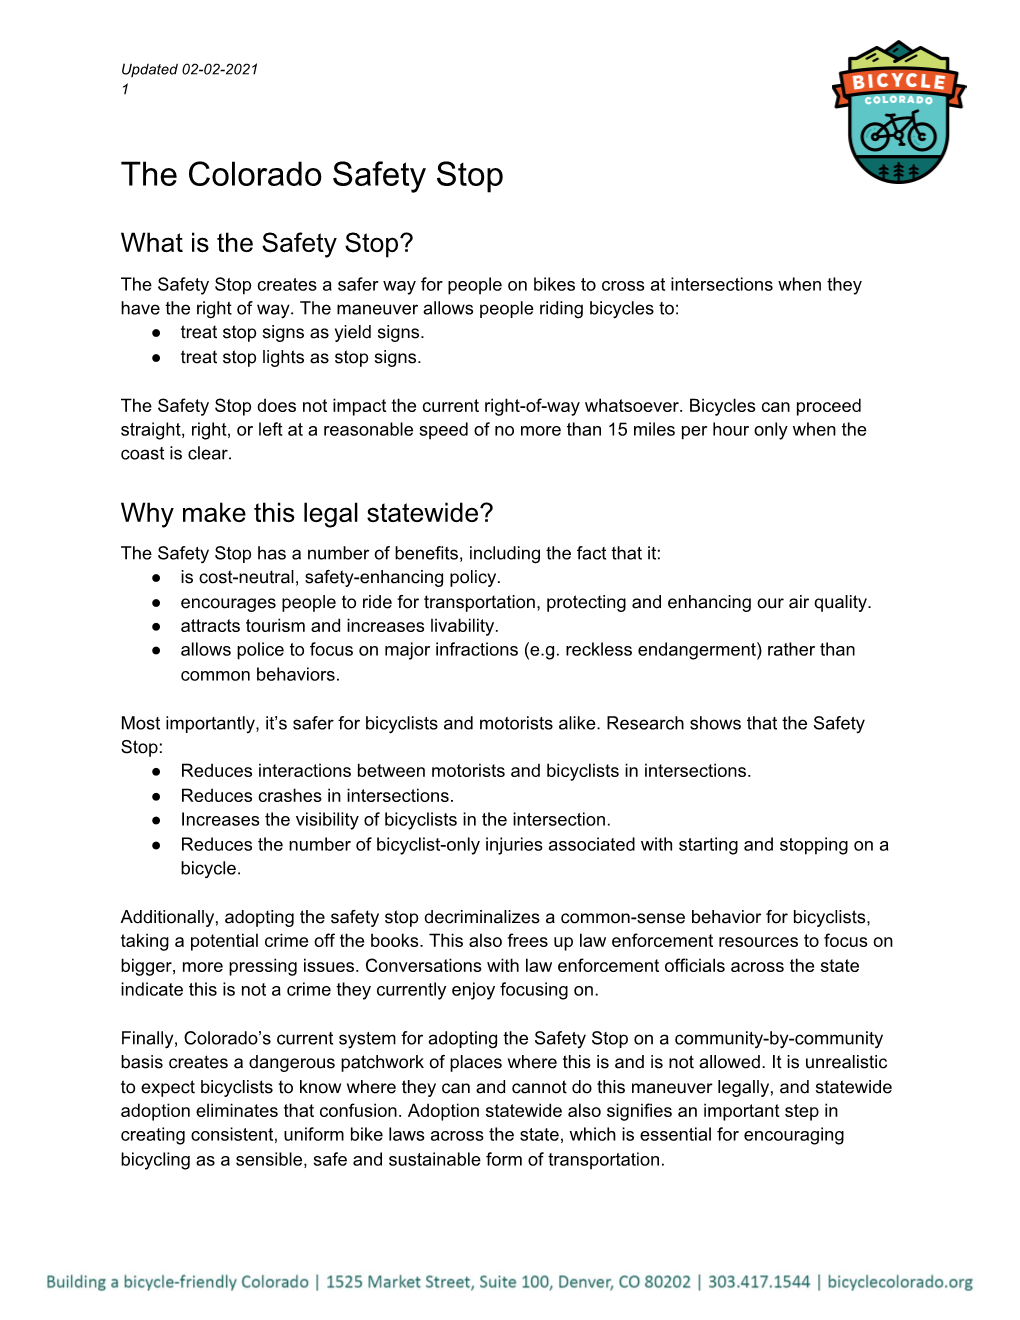 The Colorado Safety Stop